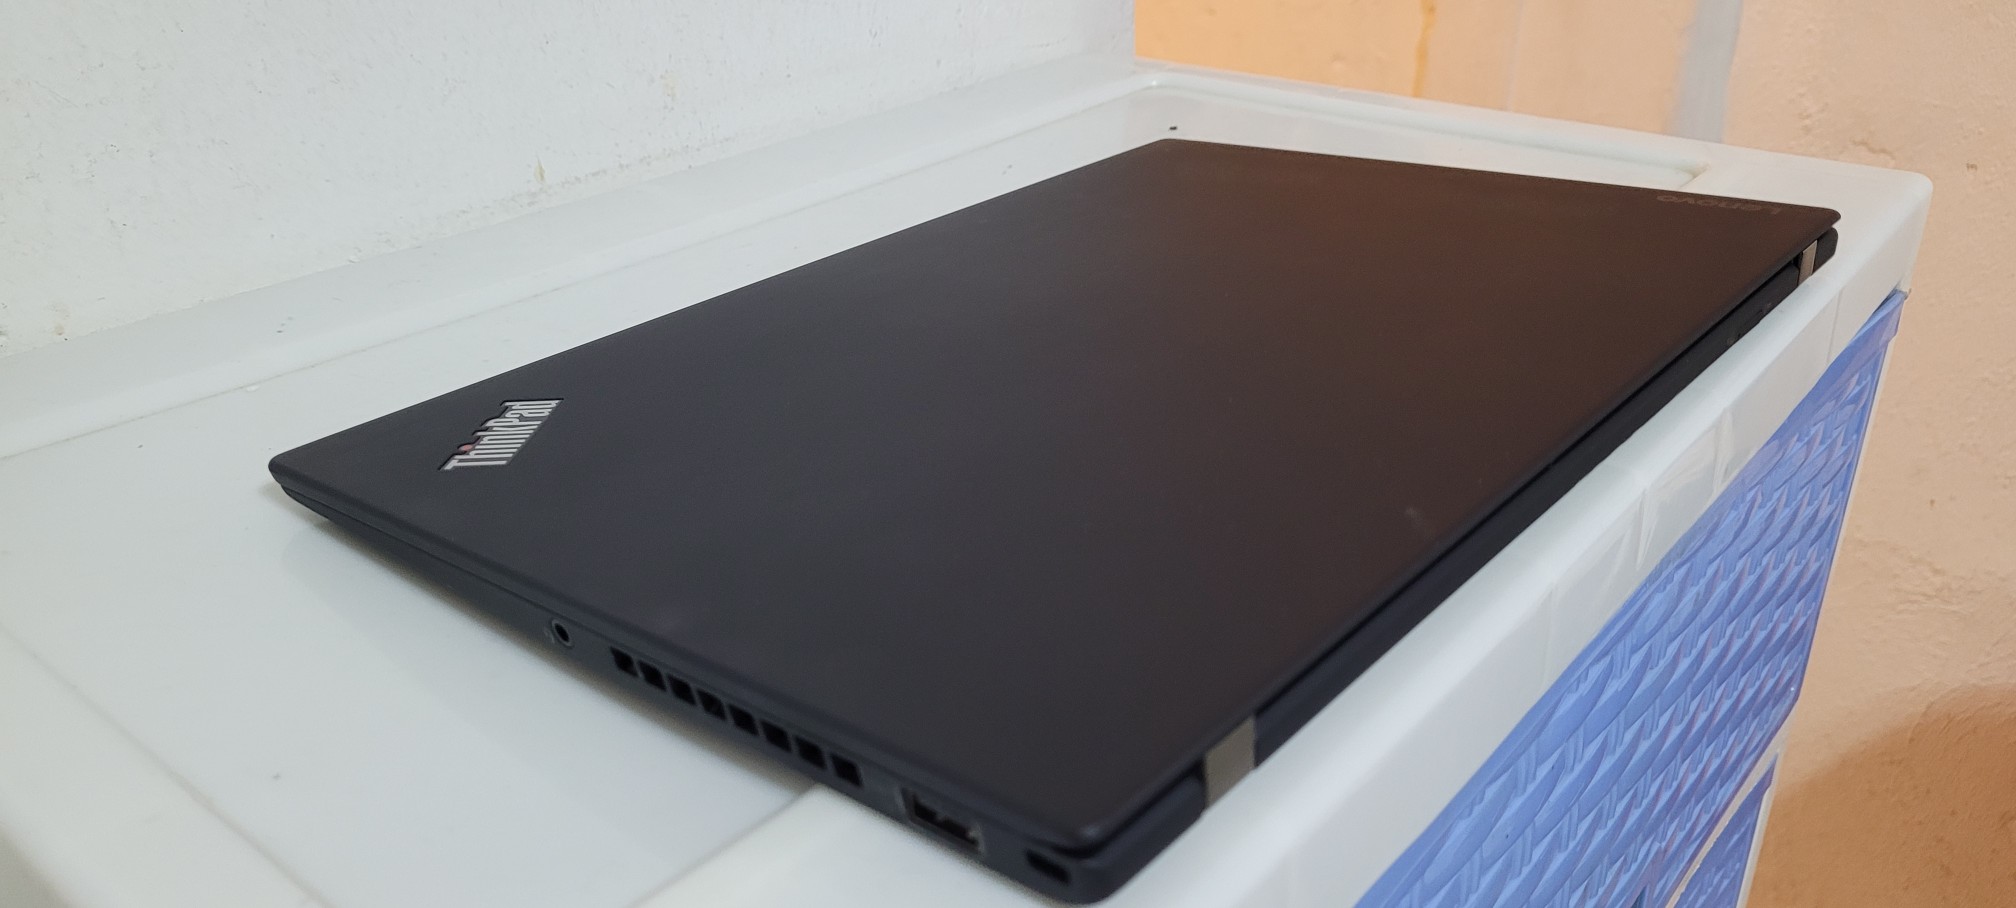 computadoras y laptops - Lenovo Slim T490 14 Pulg Core i5 8va Gen Ram 16gb ddr4 Disco 256gb SSD Video 8gb 2